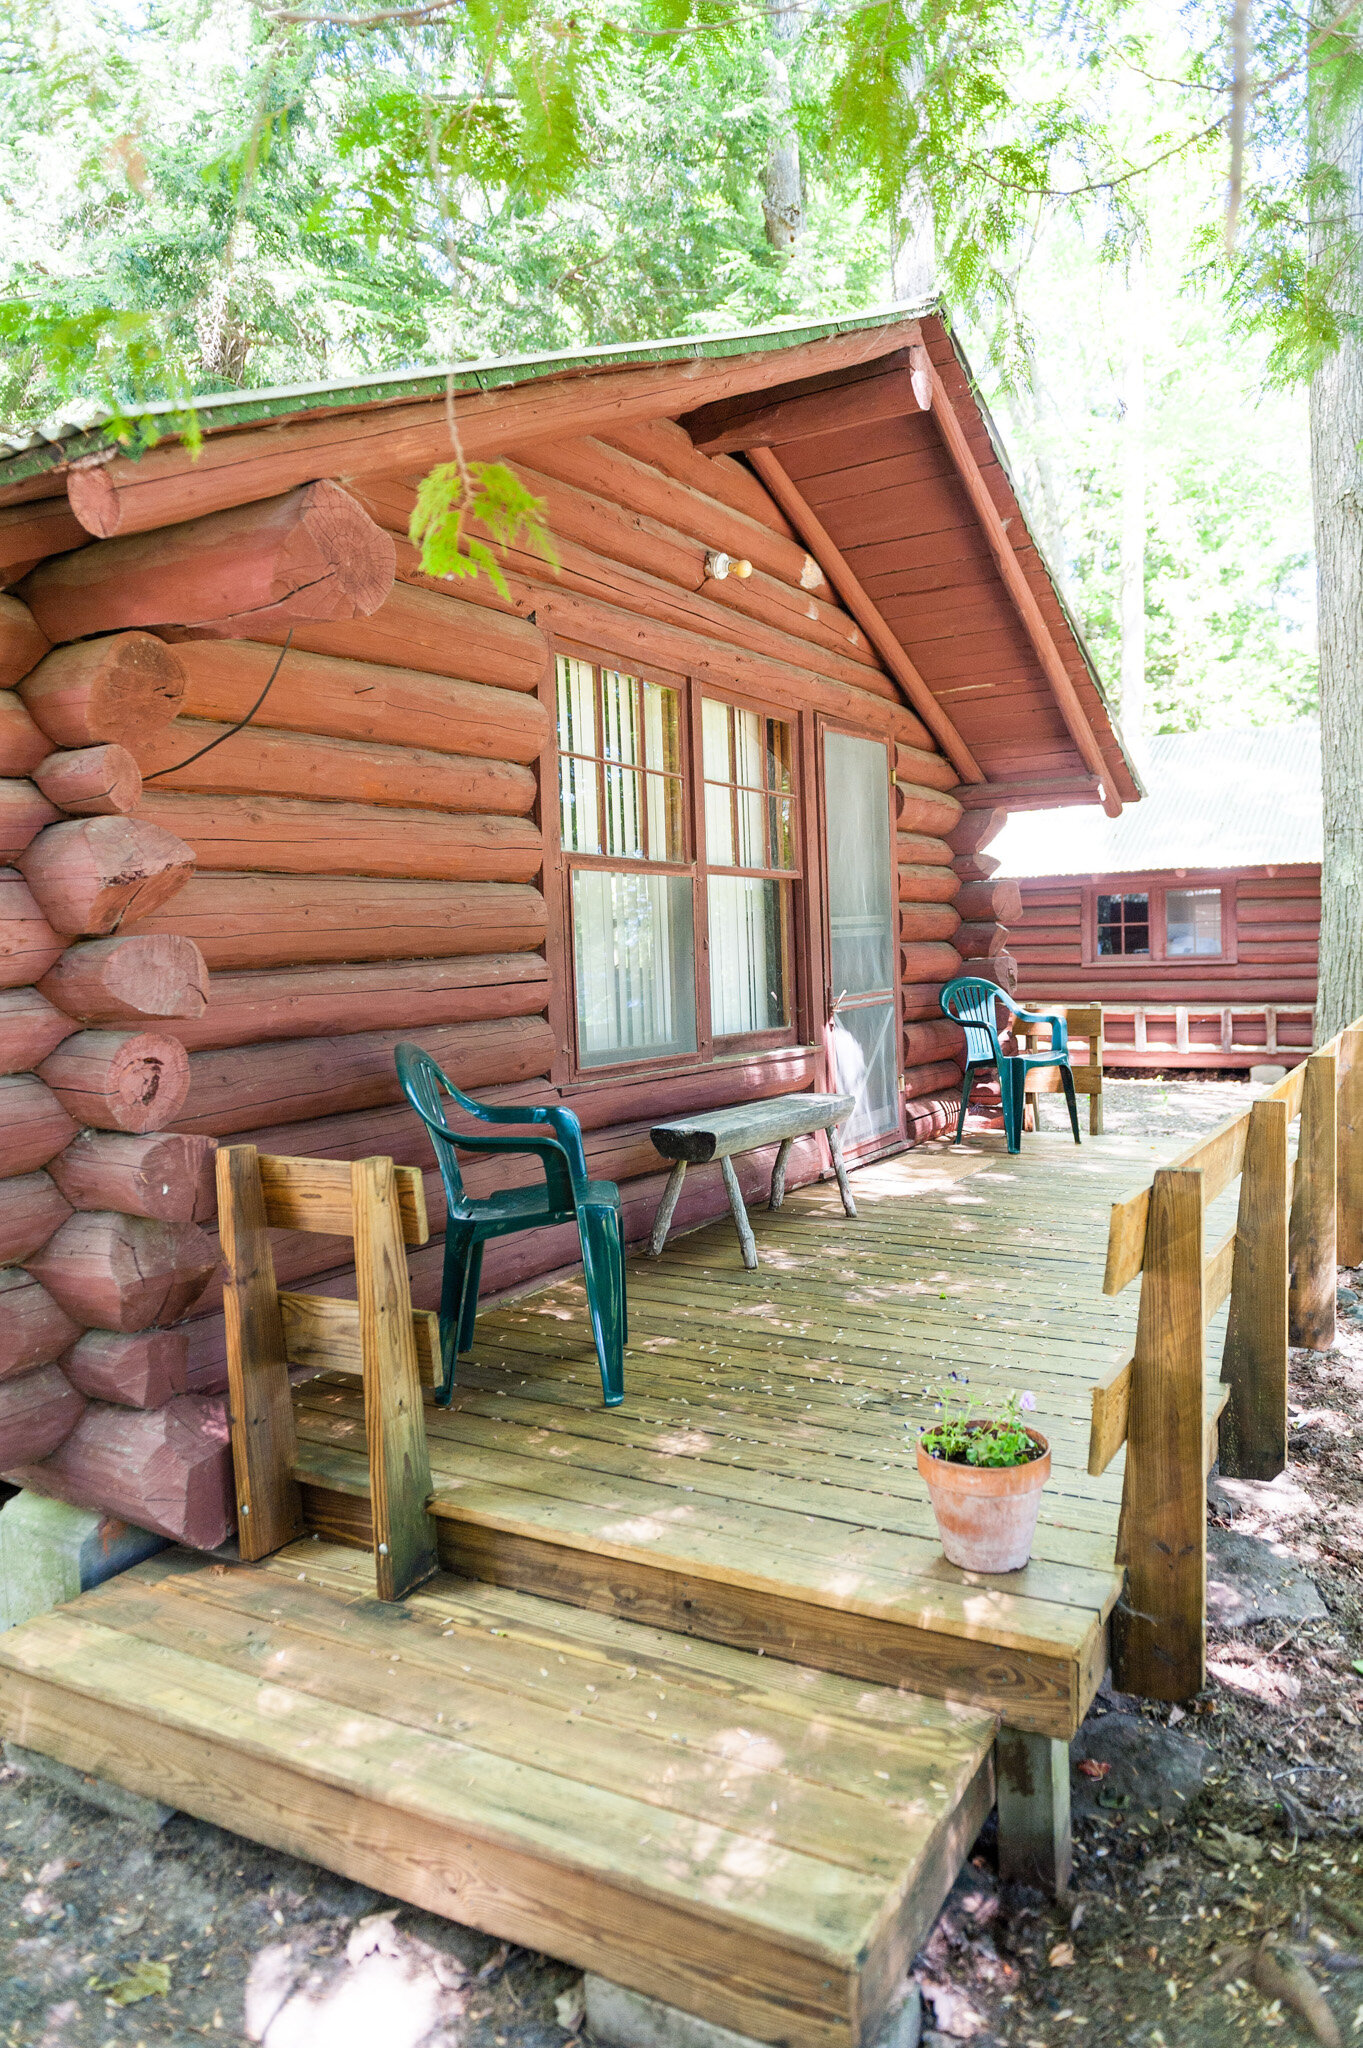 Manninen's Cabins, Otter Lake cabin rentals: Kolme log cabin